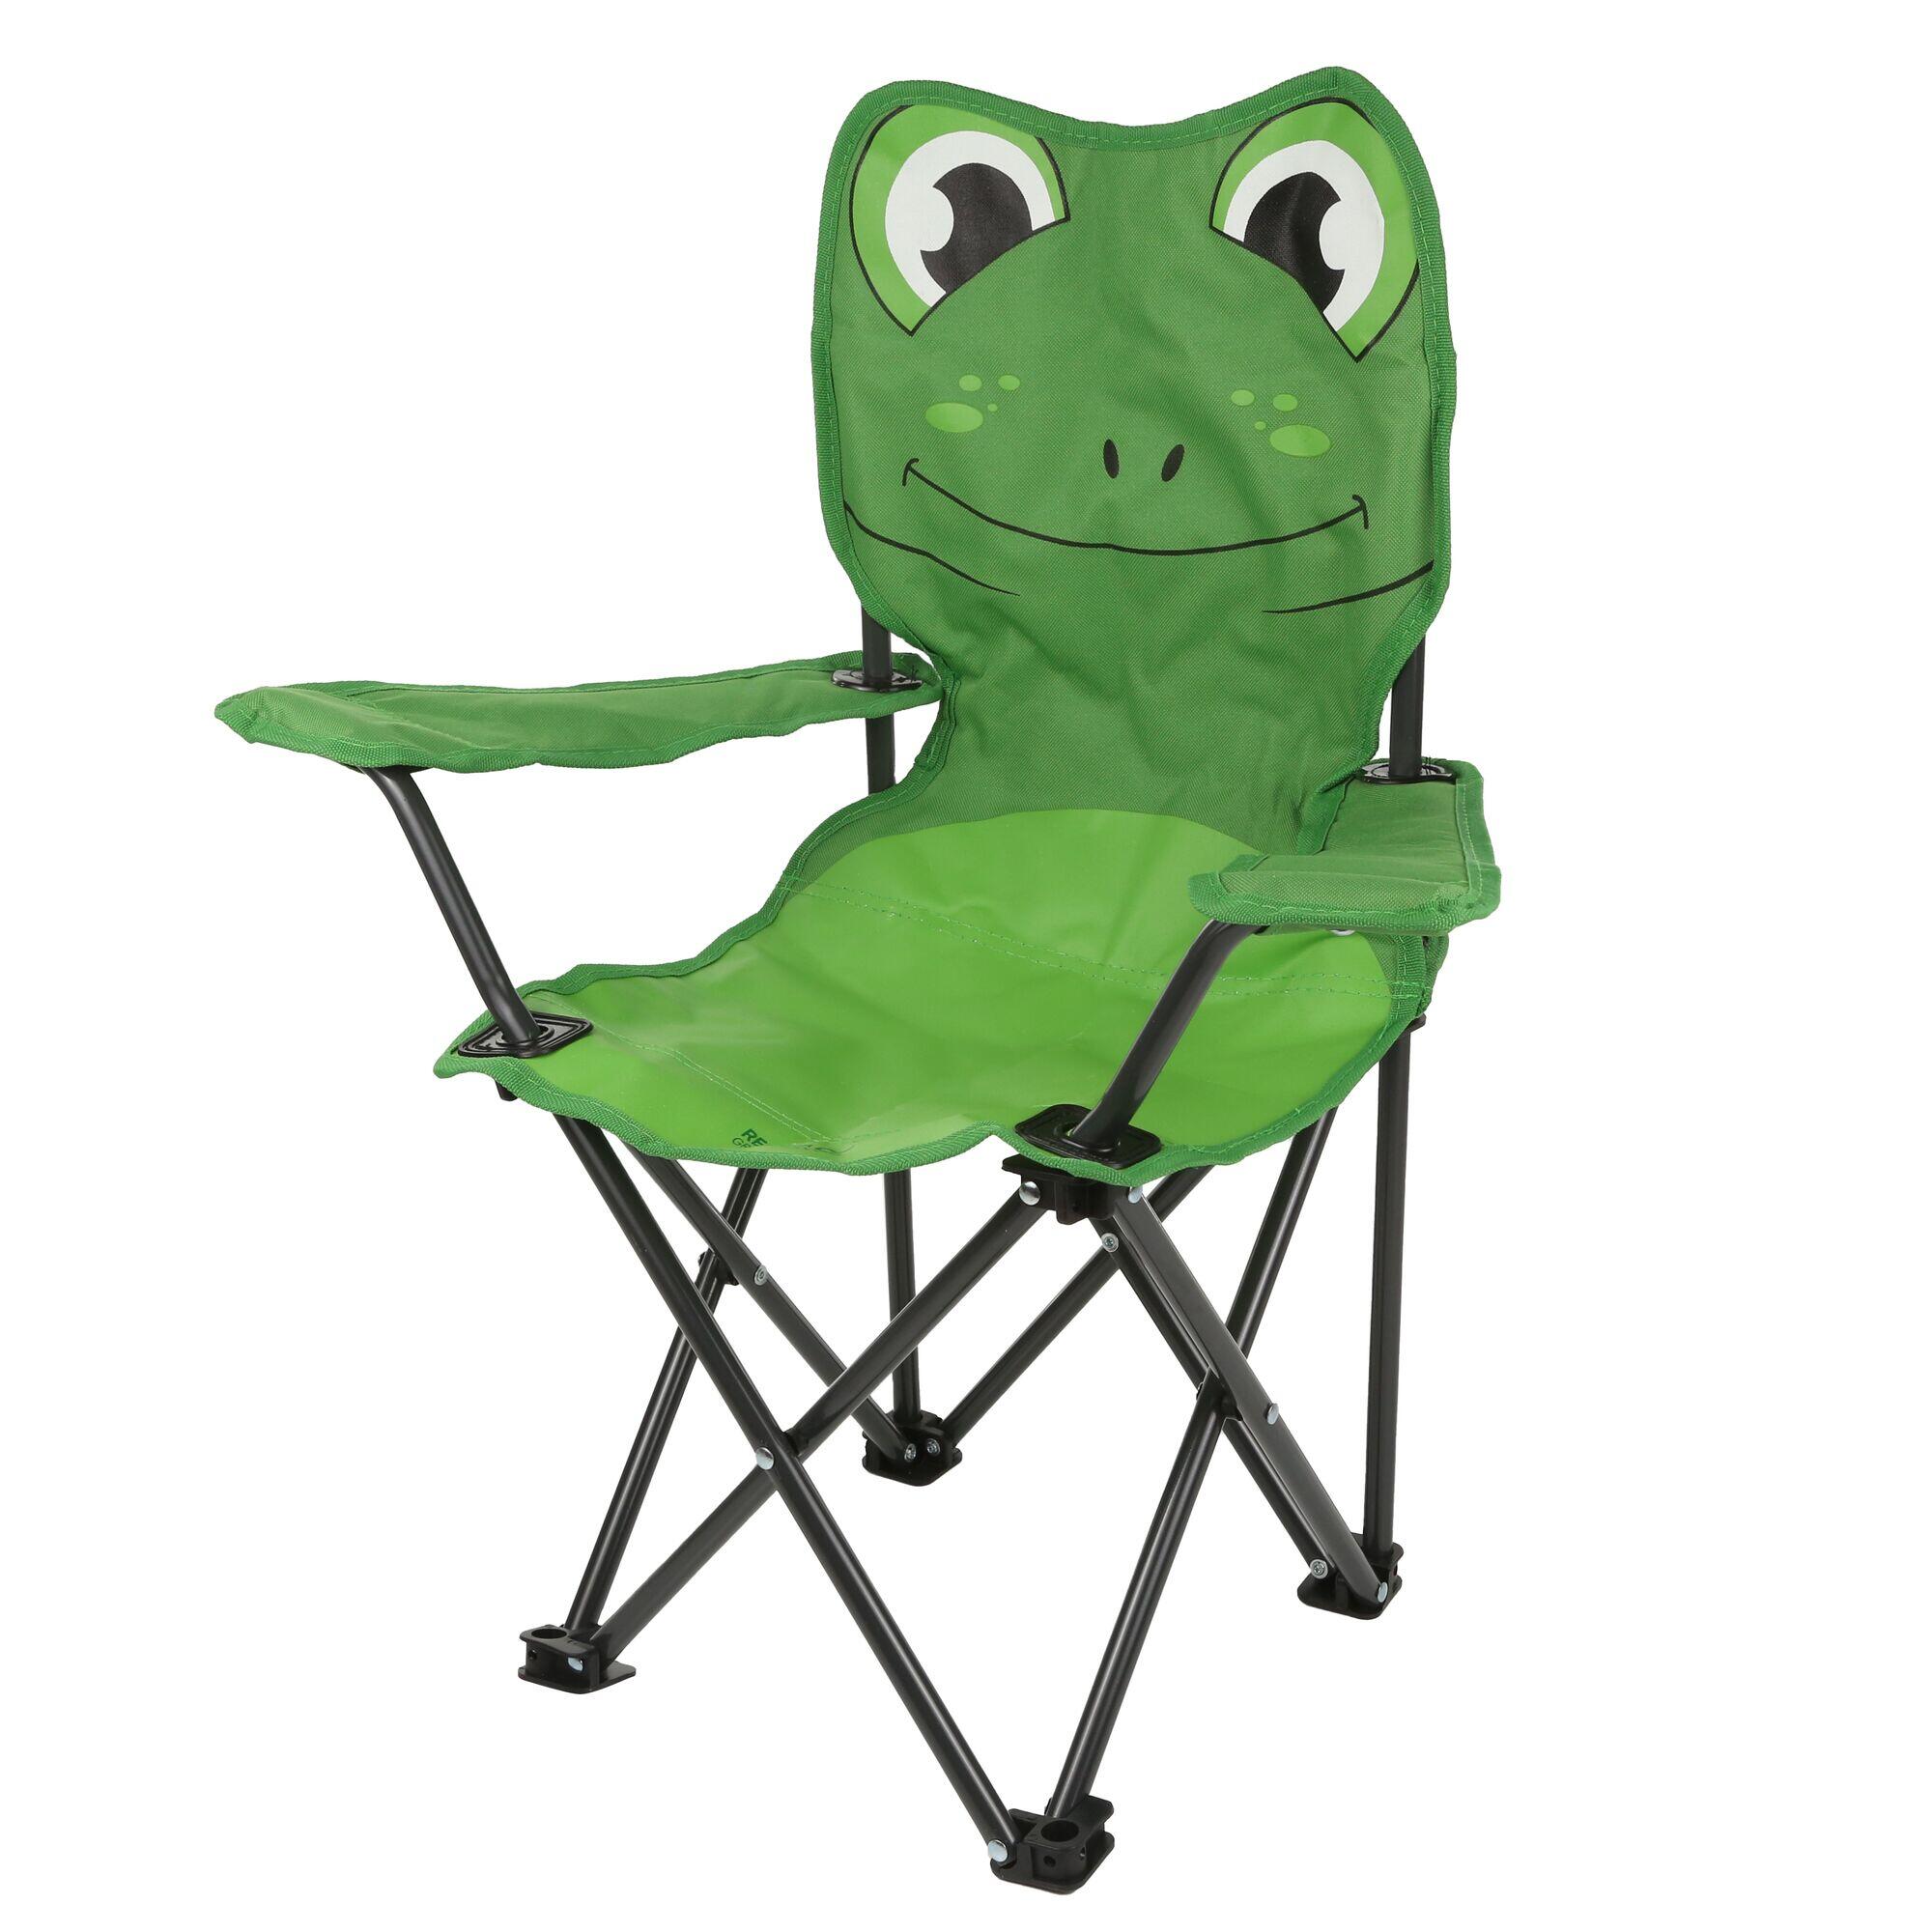 Animal Kids' Camping Chair - Green Frog 1/5